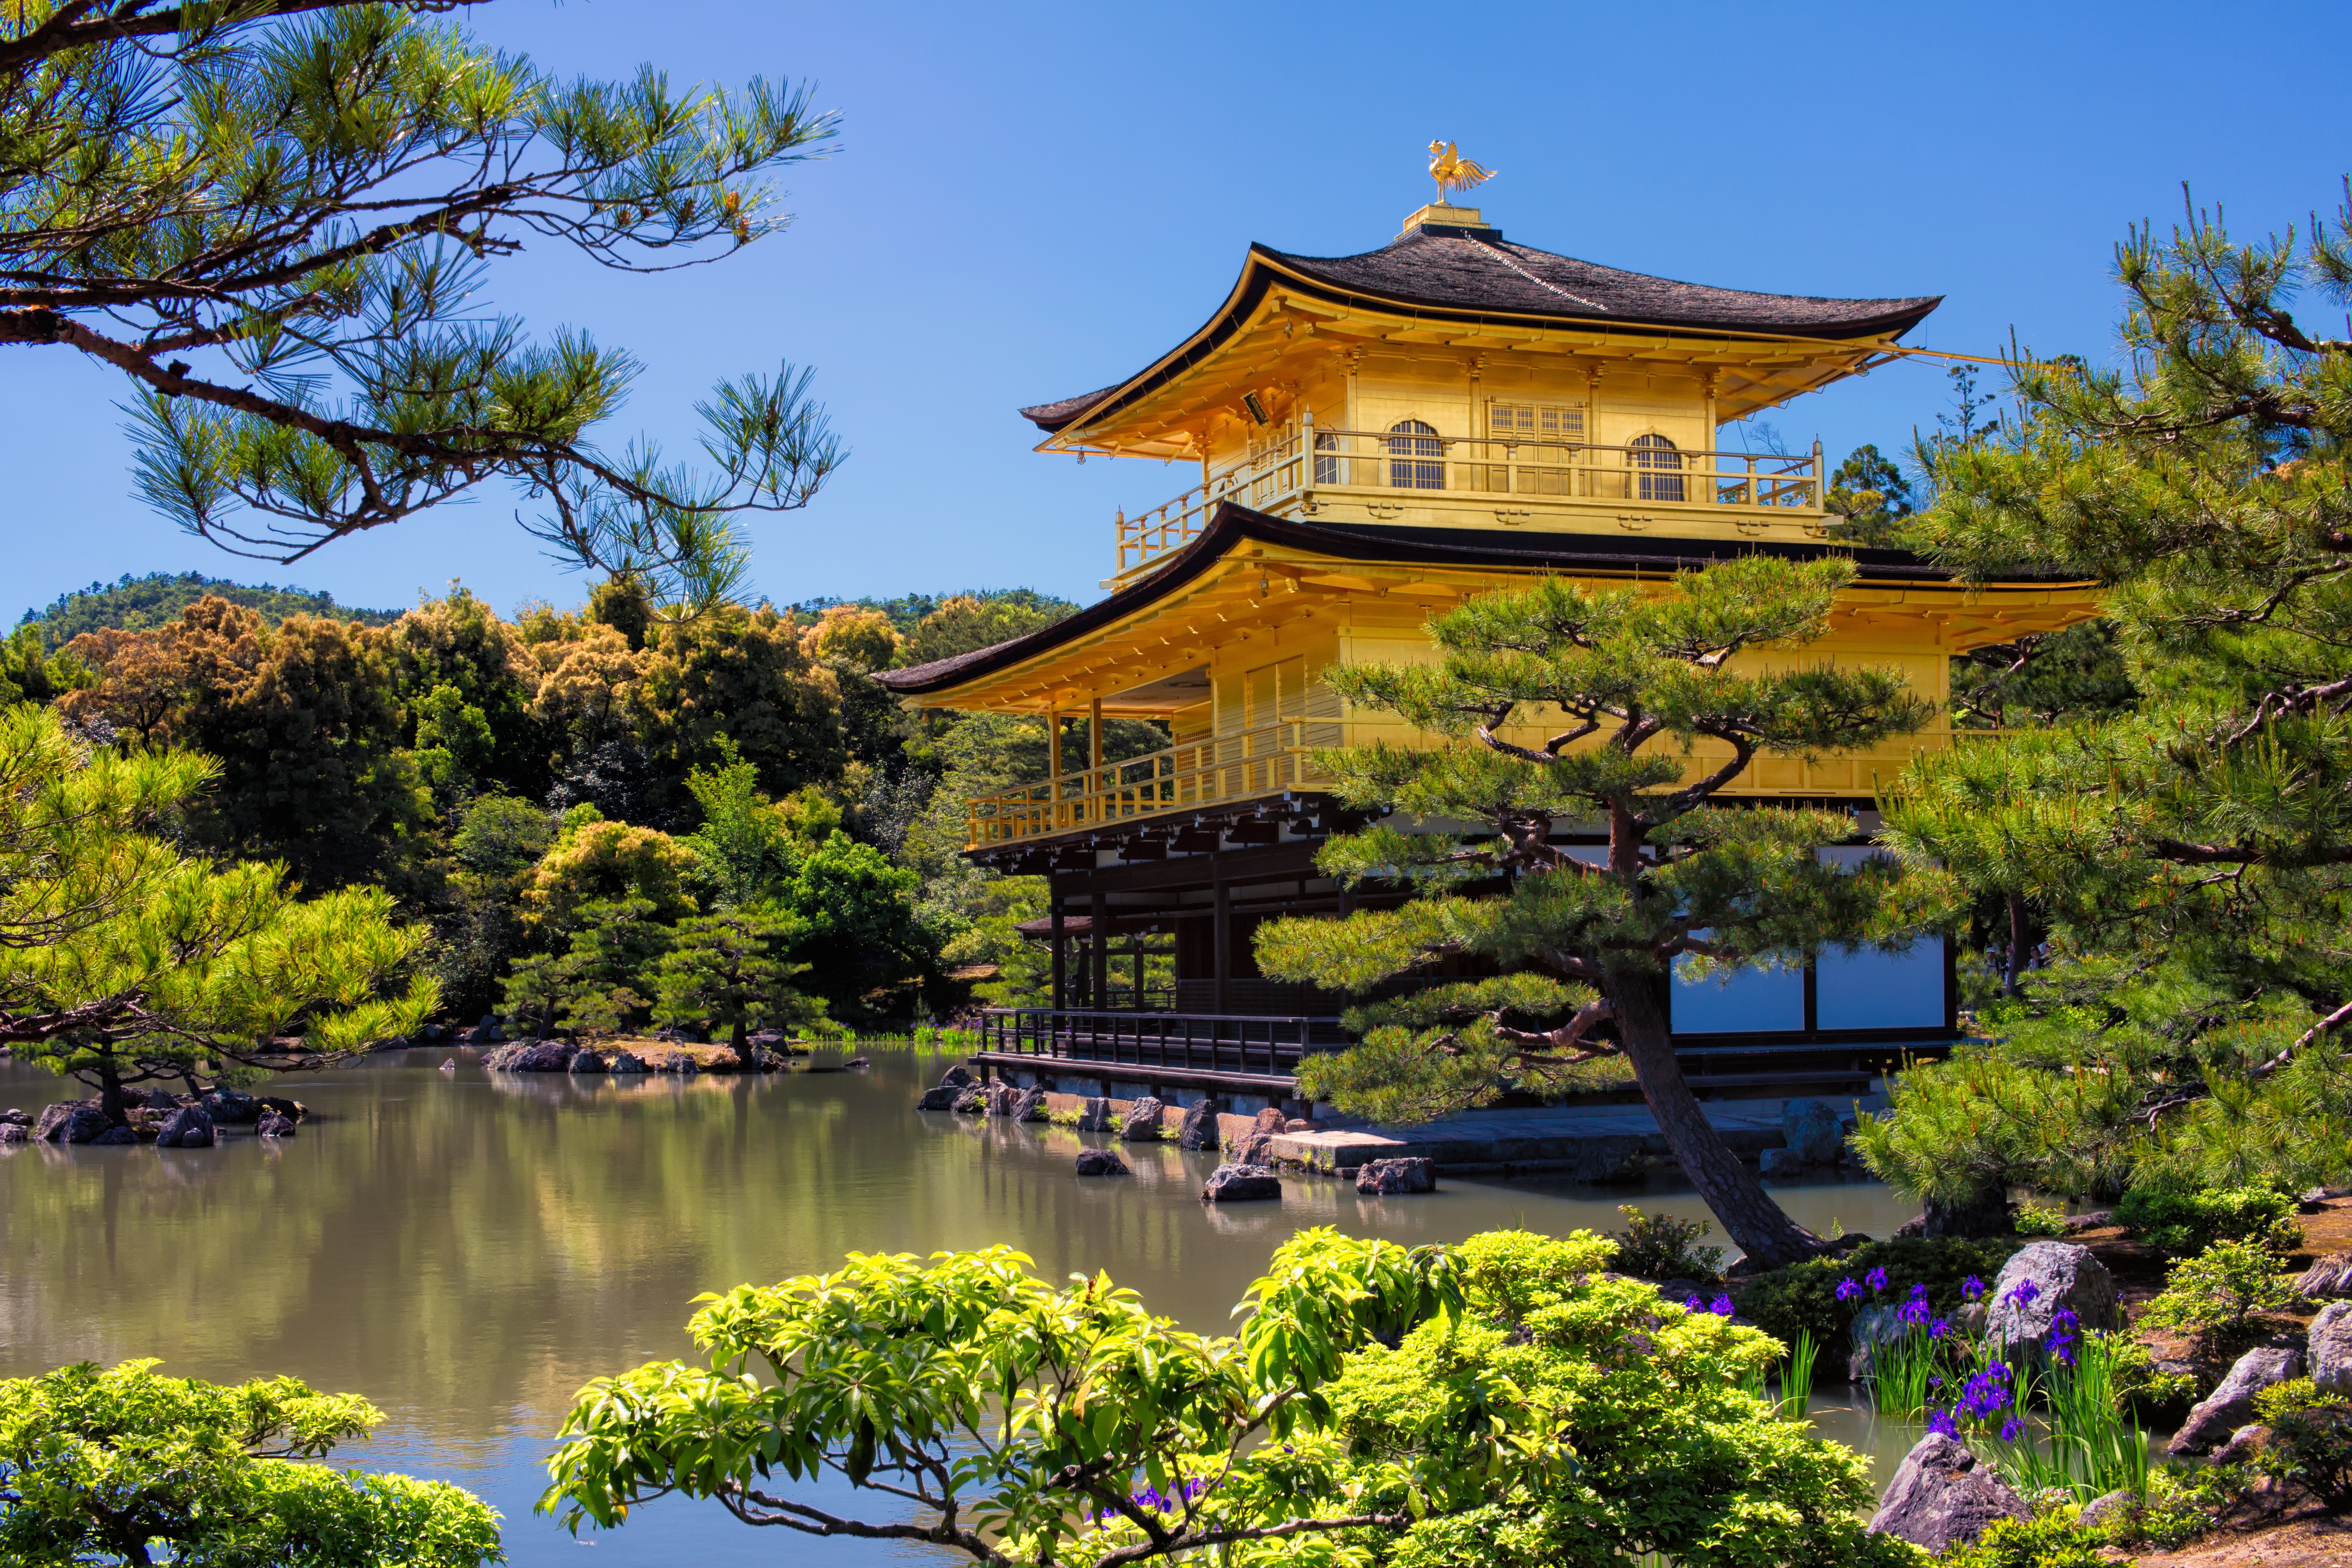 вилла, деревья, Золотой павильон, Кинкаку-дзи, киото, павильон, парк, пейзаж, природа, пруд, Рокуон-дзи, храм, япония